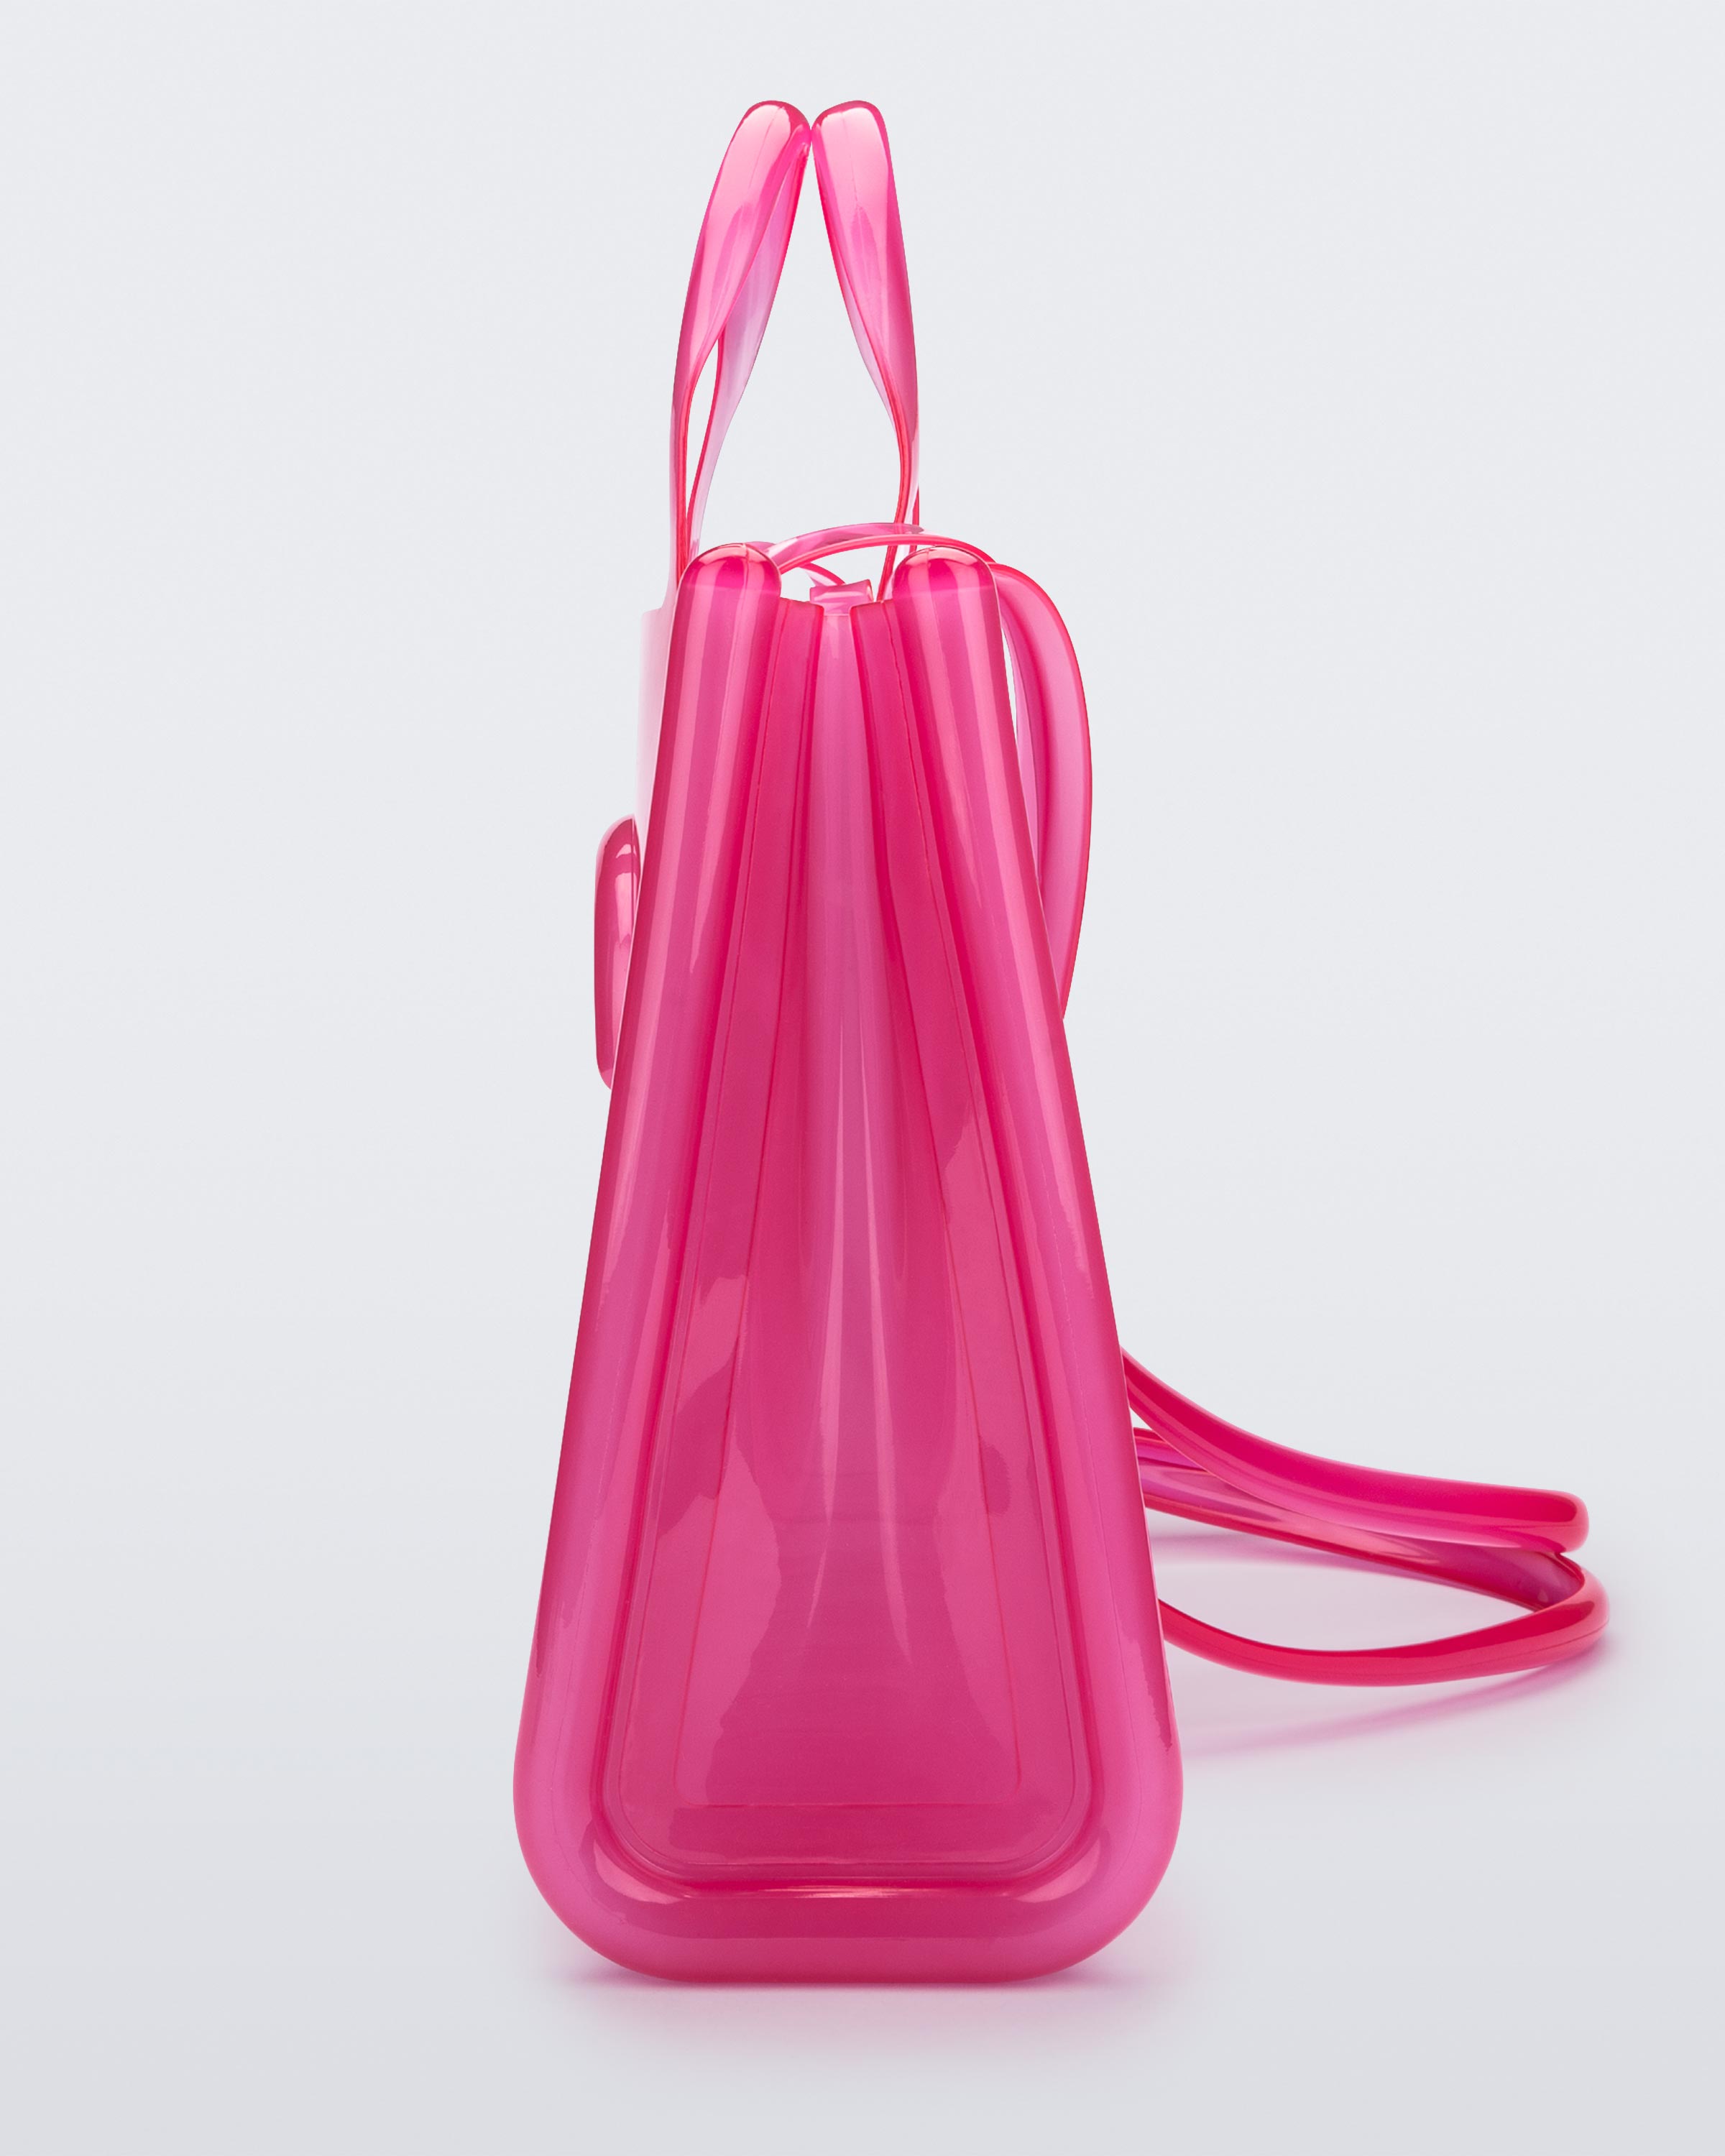 Melissa Large Jelly Shopper Bag + Telfar - Clear Pink